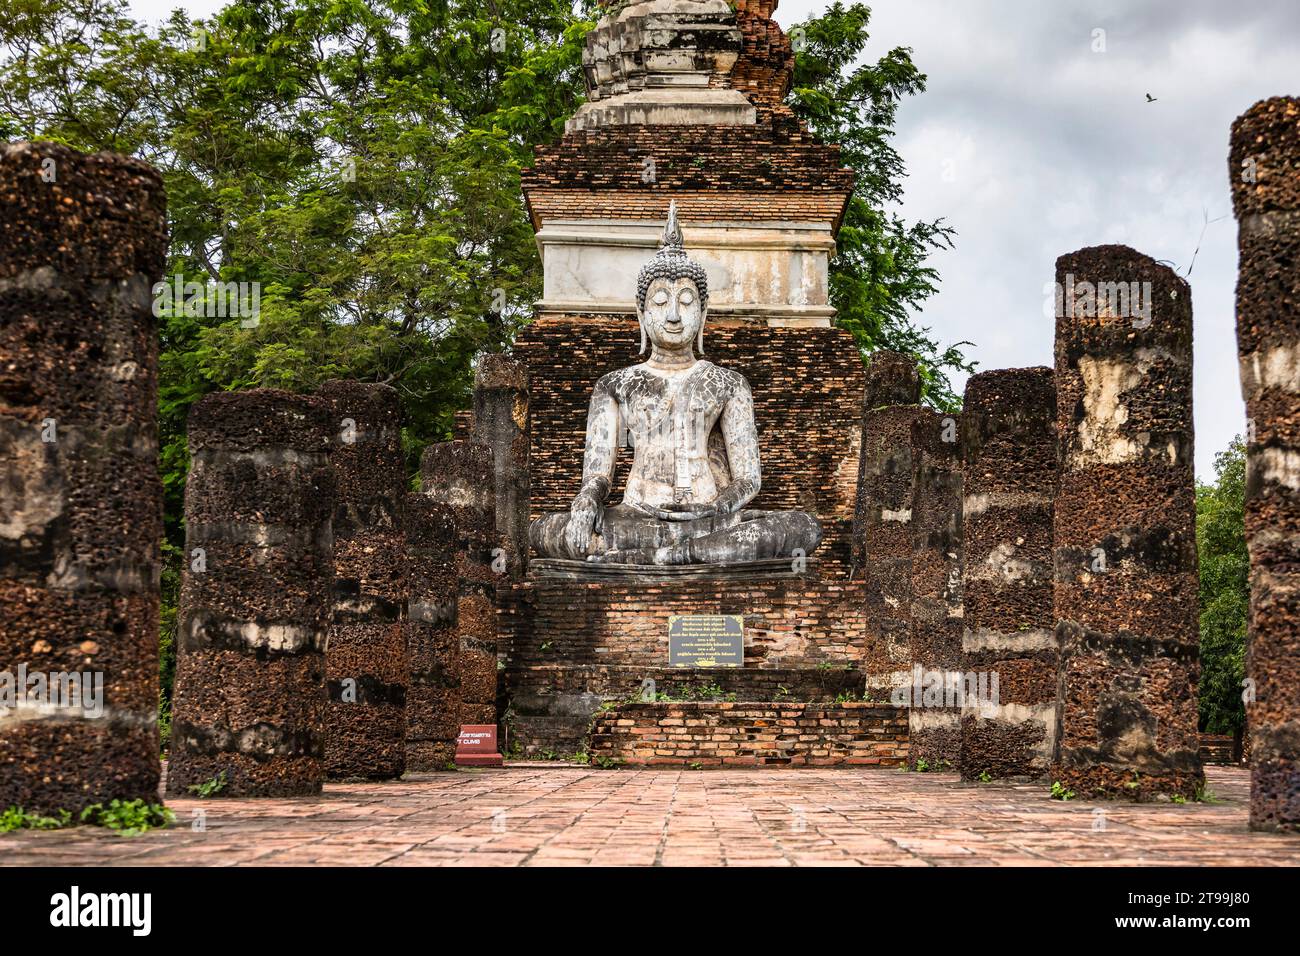 Parco storico di Sukhothai, Wat Traphang Ngoen, statua del Buddha di meditazione, Sukhothai, Thailandia, sud-est asiatico, Asia Foto Stock